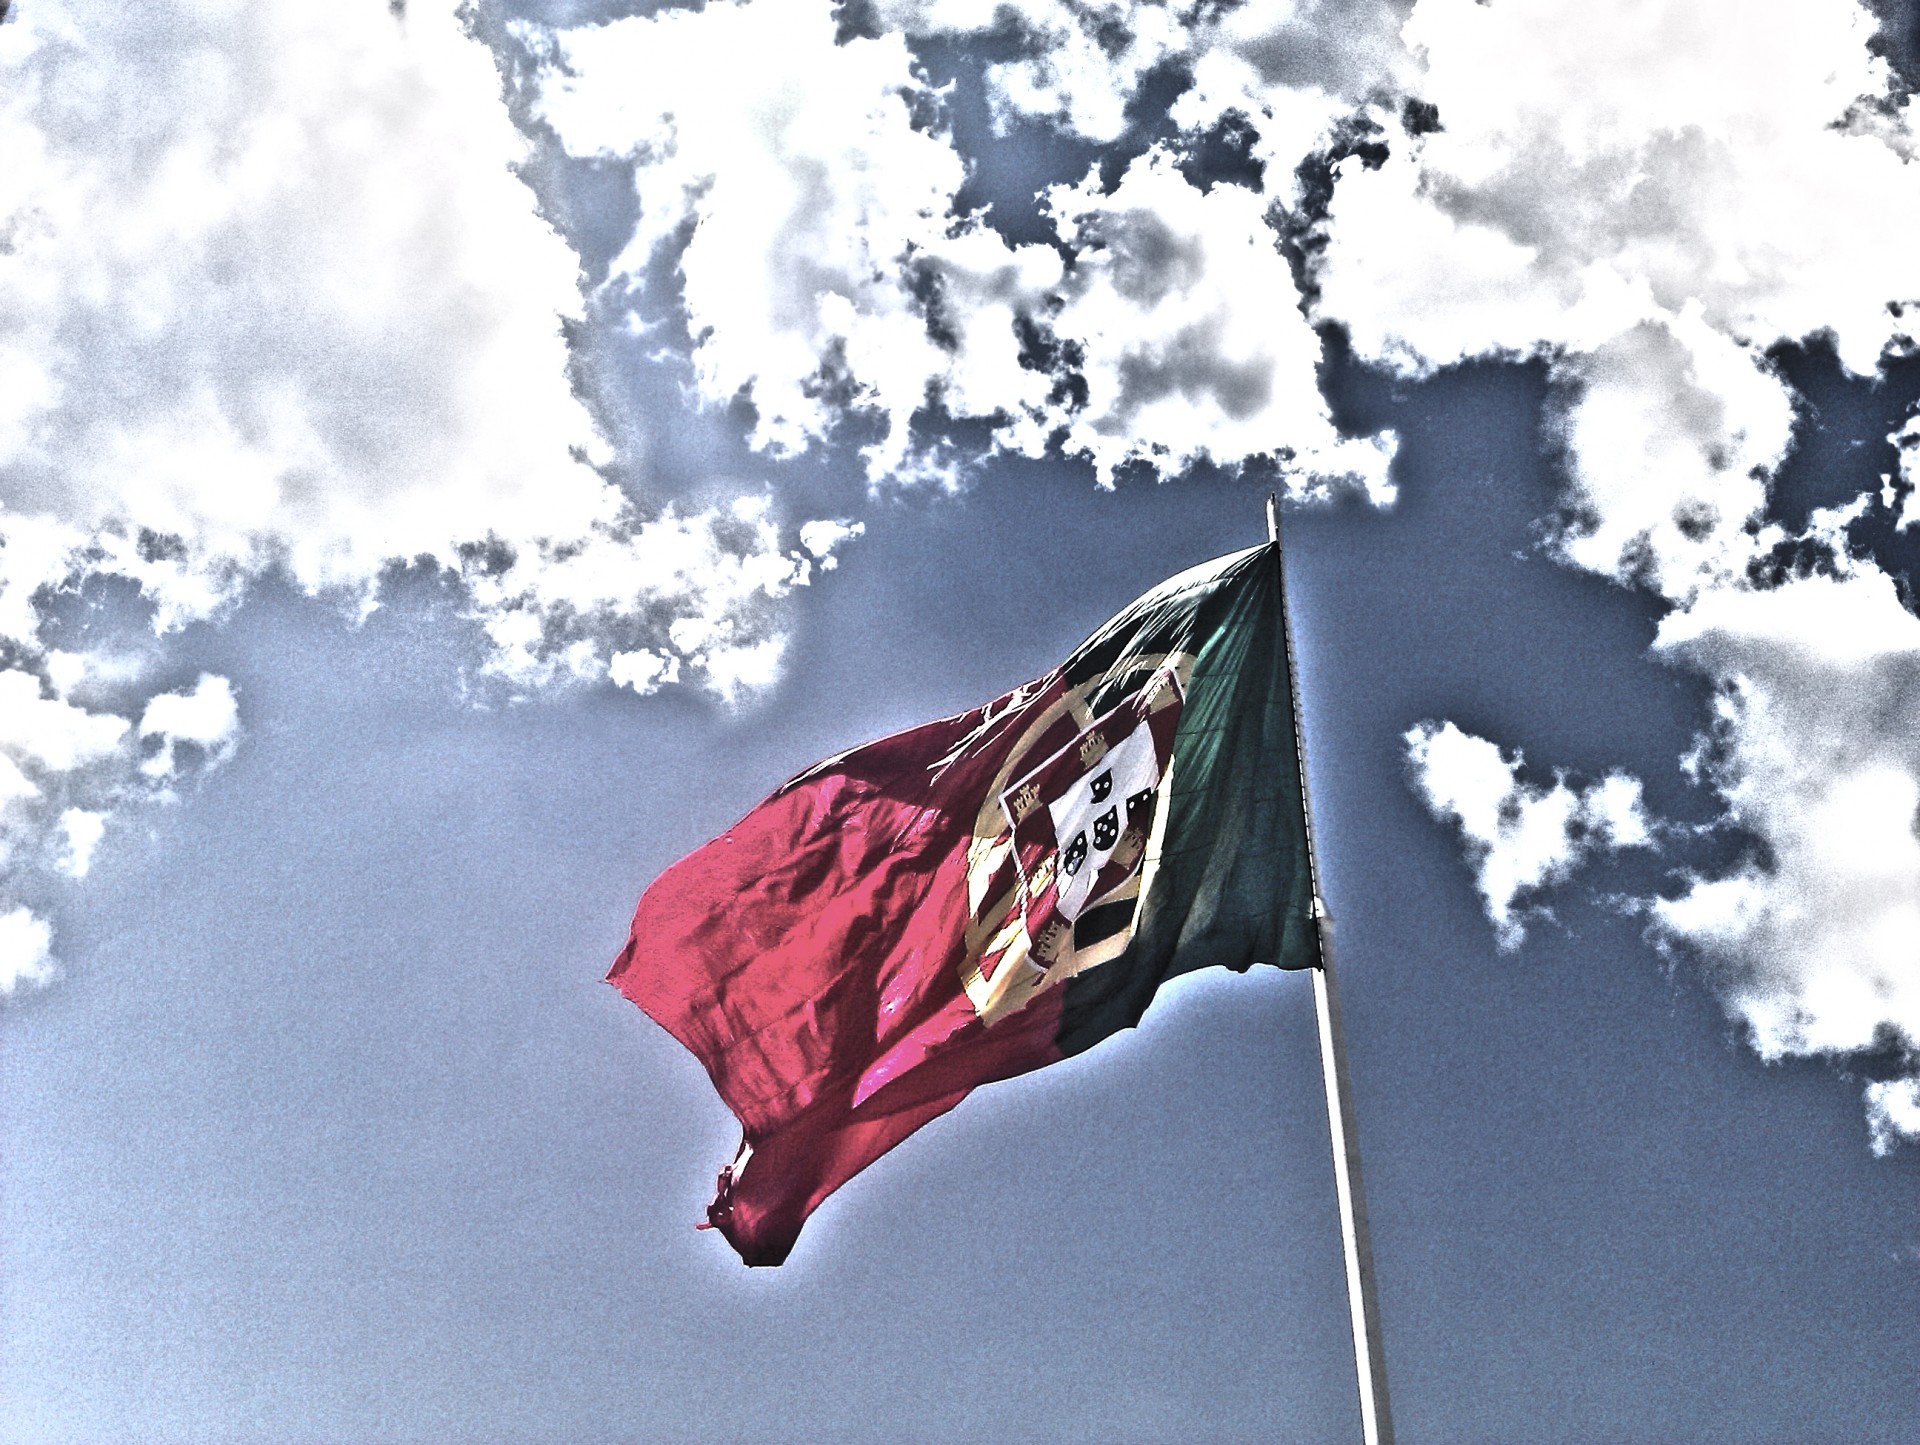 Португальским флагом